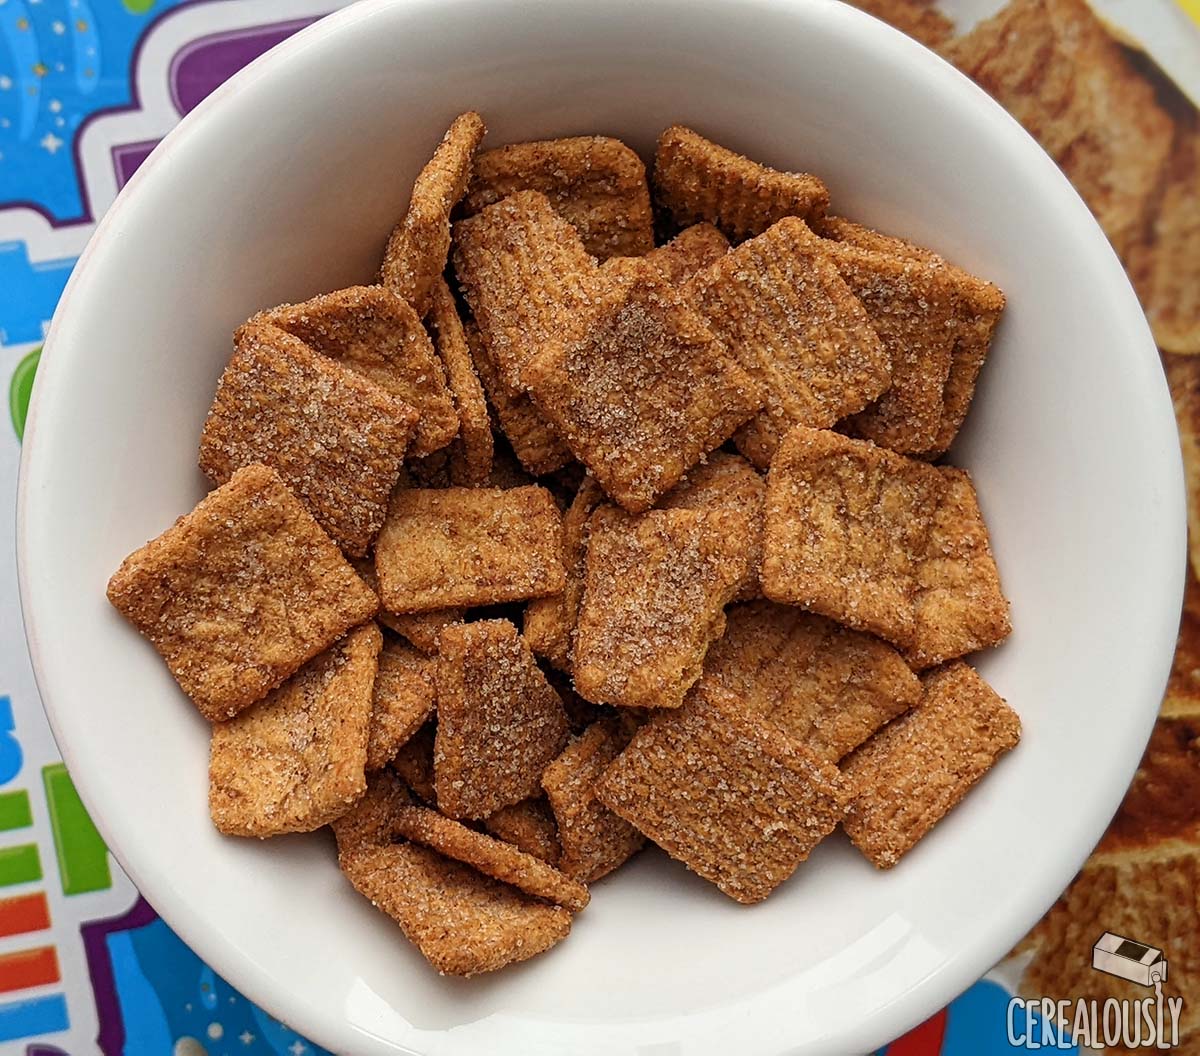 Cinnamon Toast Crunch Cereal Case